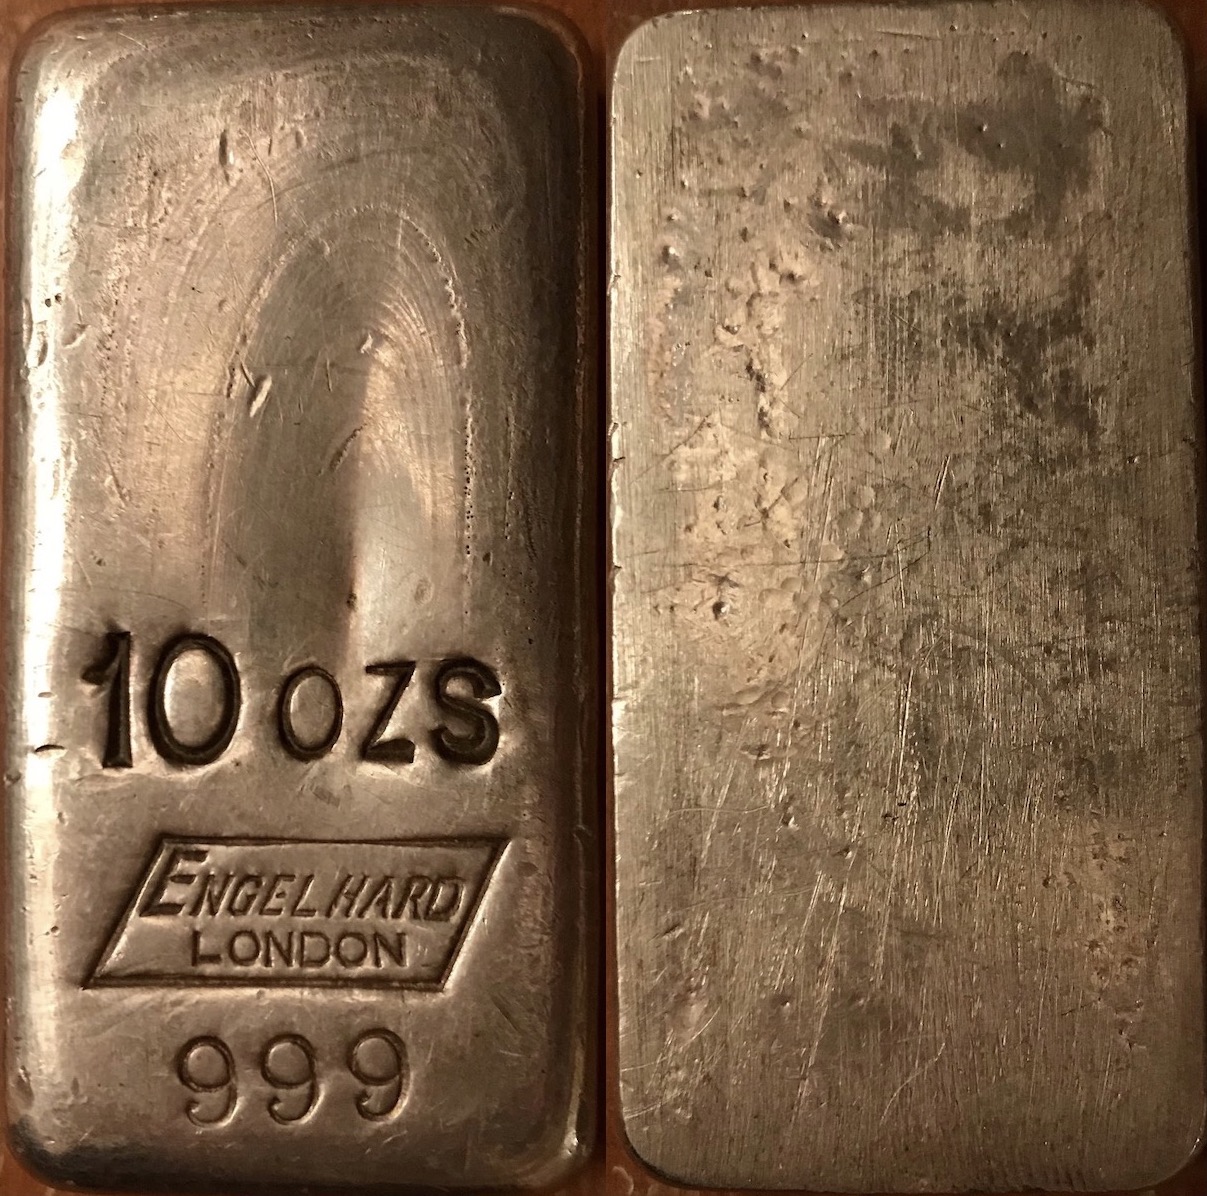 2 oz Square Gold Bar Slab Mold 1 oz Silver Bar High Density Graphite Loaf Copper Made in The USA 